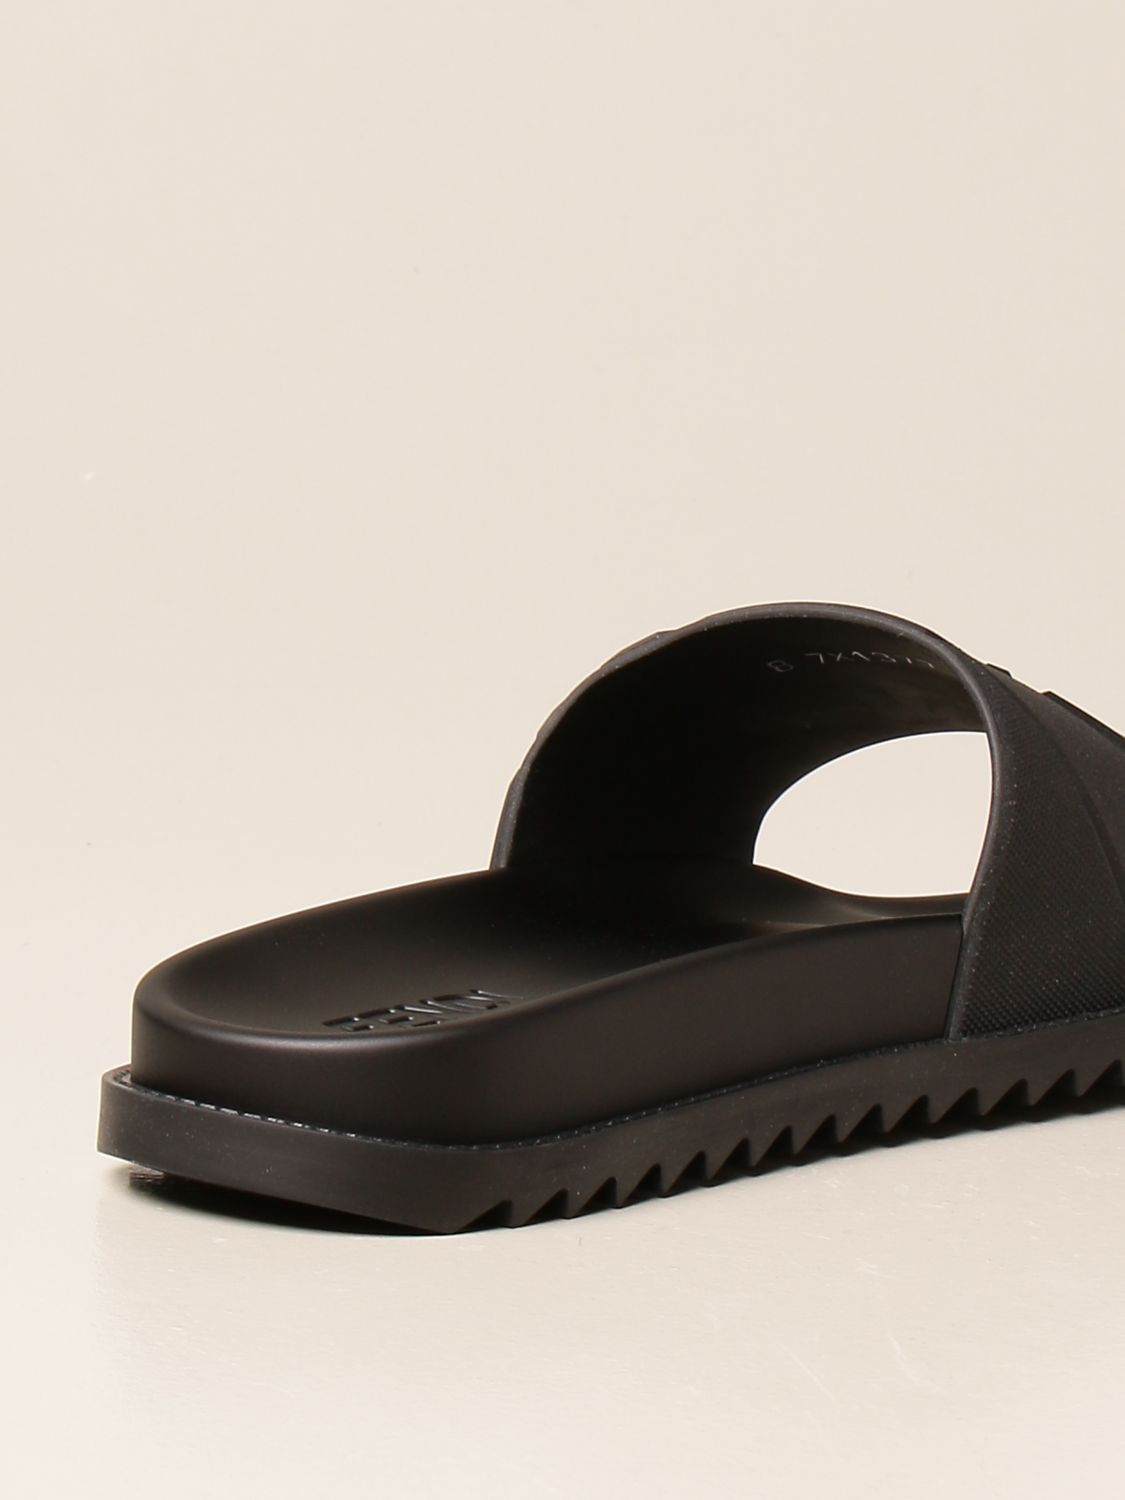 FENDI: rubber with embossed FF logo | Sandals Fendi Men Black | Fendi 7X1377 ABO2